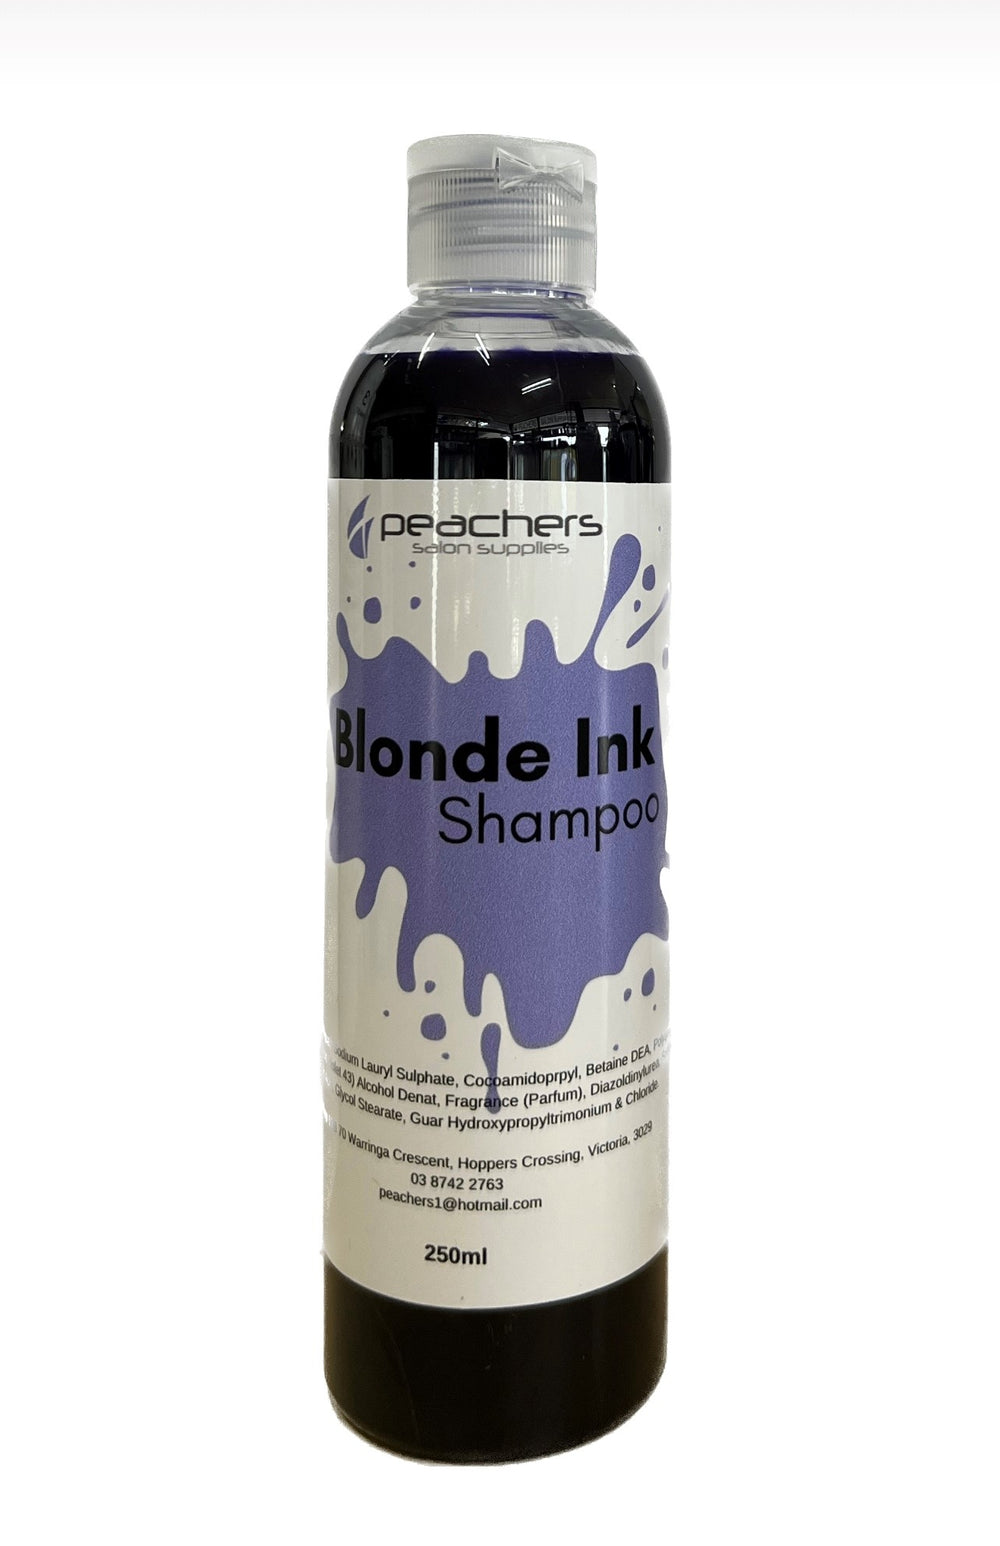 Peachers Blonde Ink shampoo 250ml